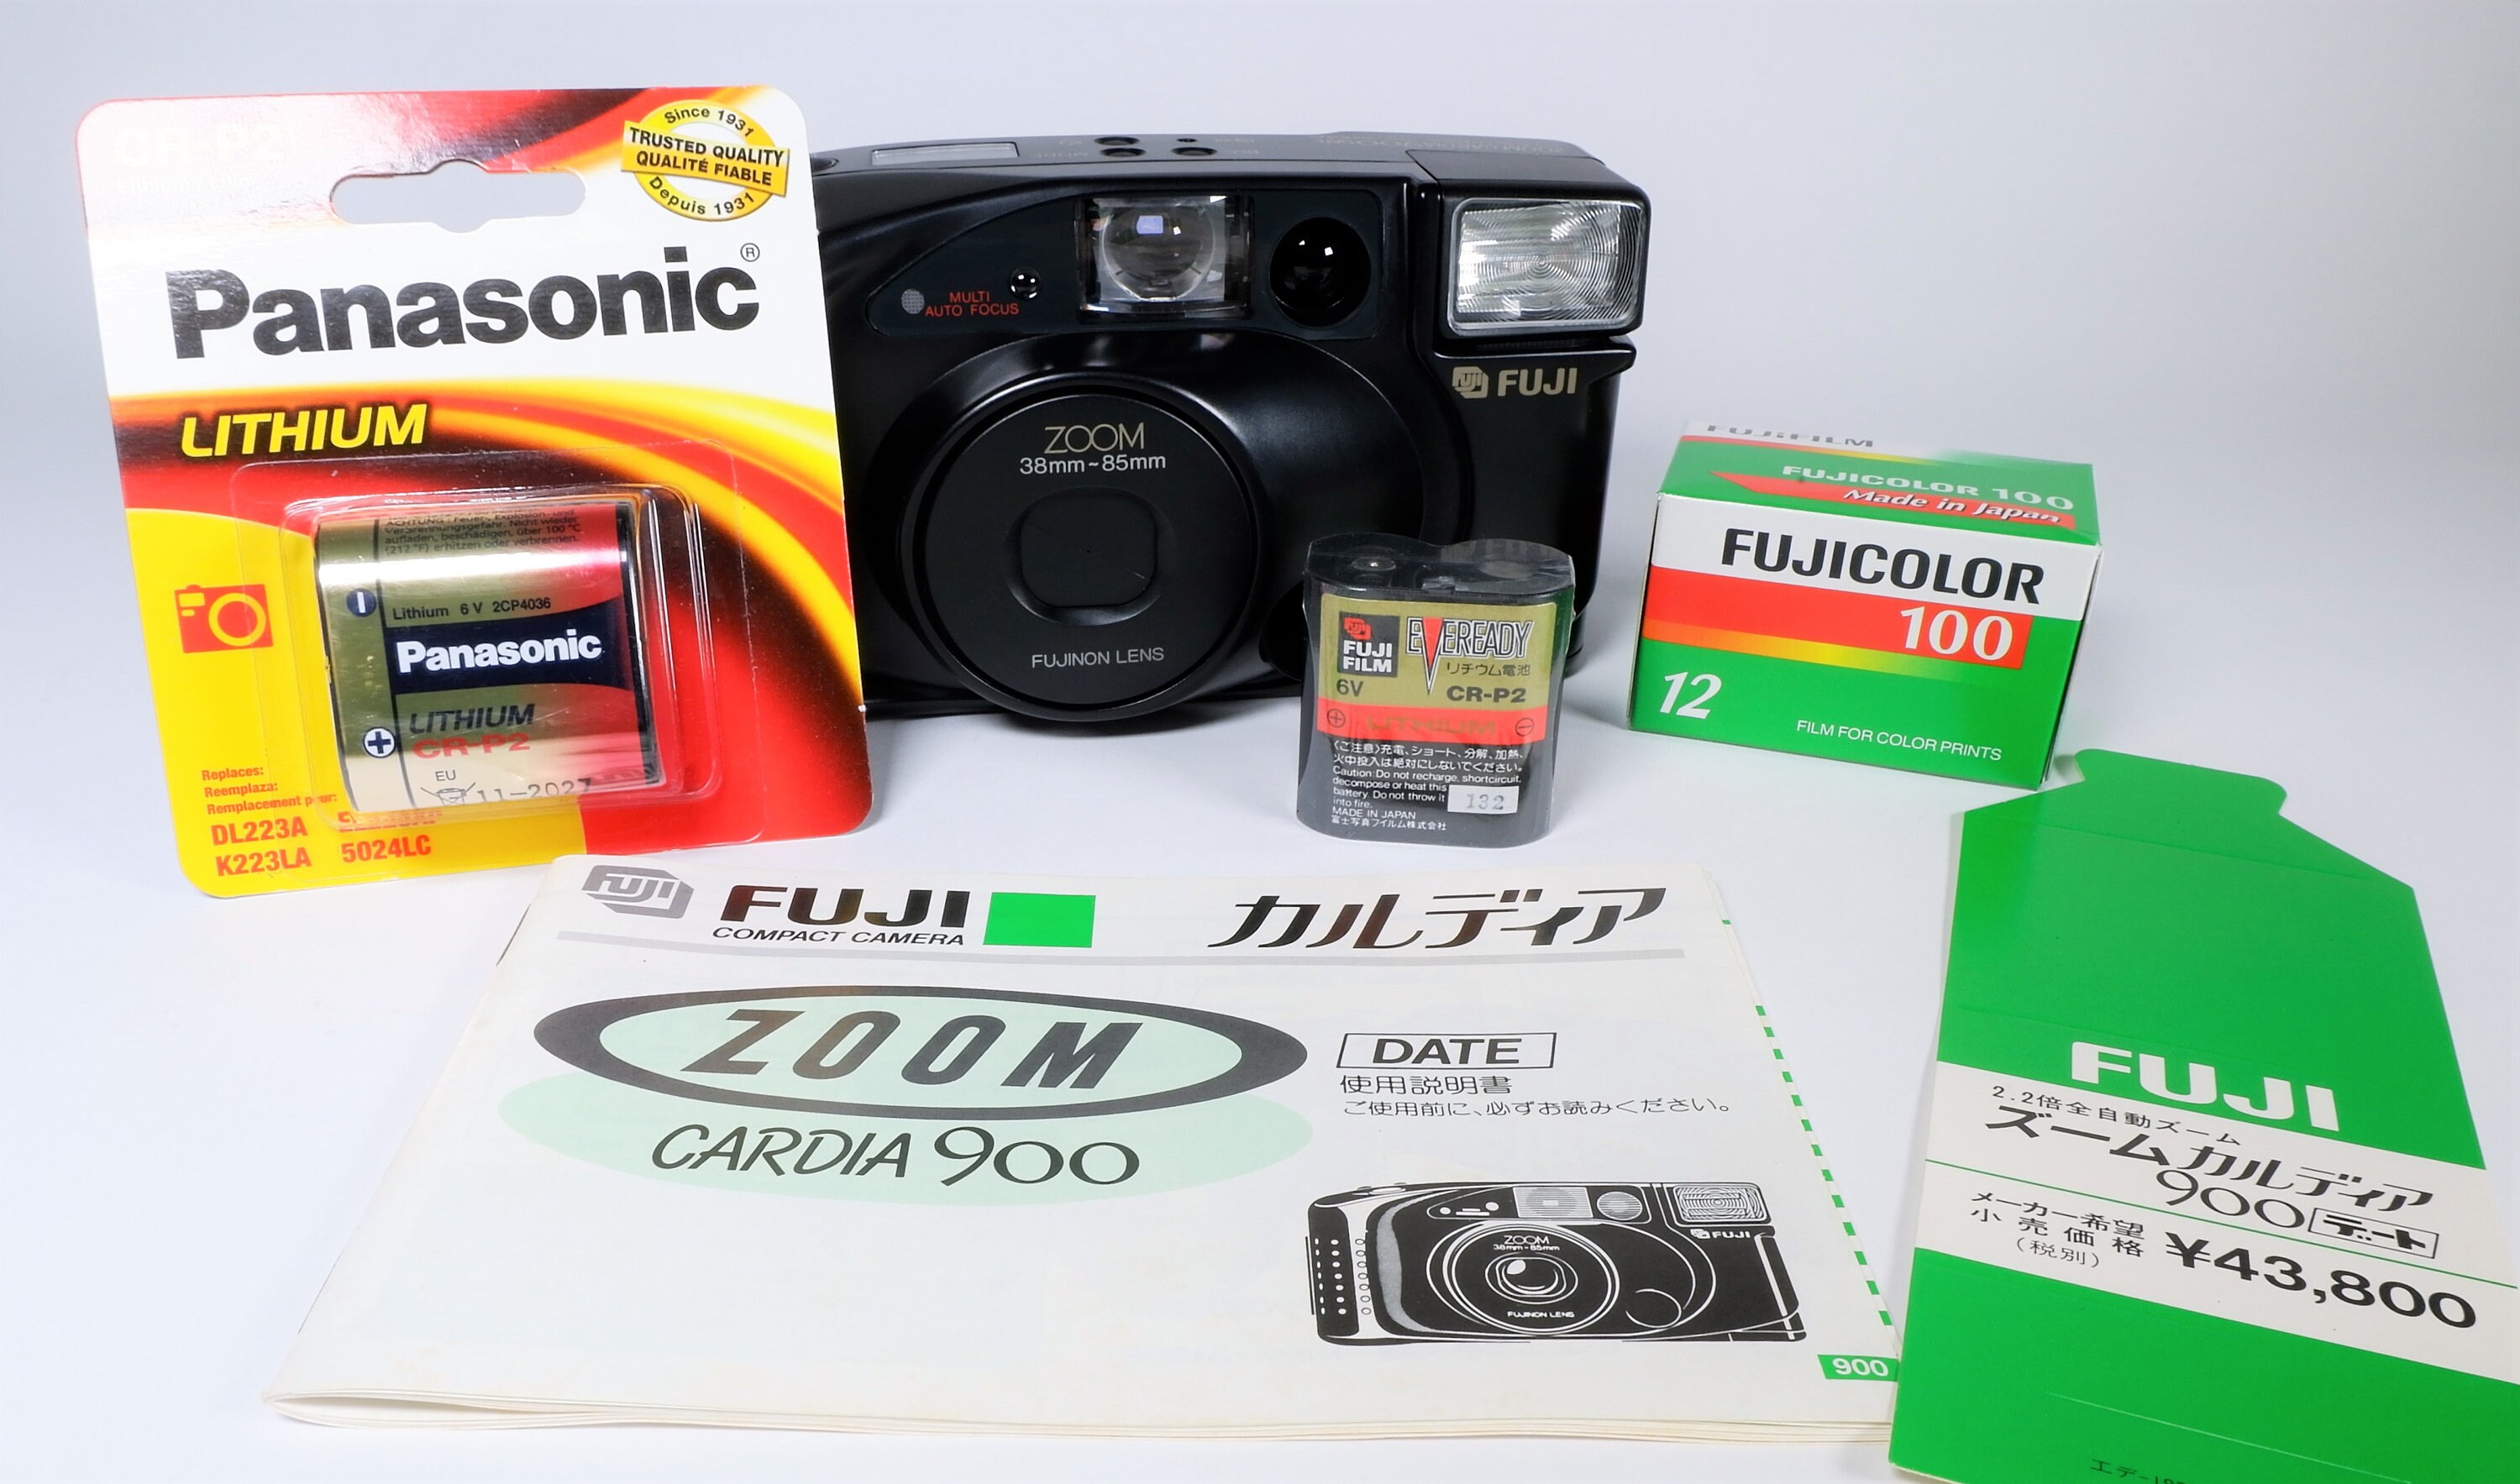 bloeden Vergadering Fysica Fujifilm Zoom Cardia 900 Date 35mm Compact Camera Outfit - Mint in the Box  - Fujinon Lens - Fujicolor Film, Batteries, Case, Books Included